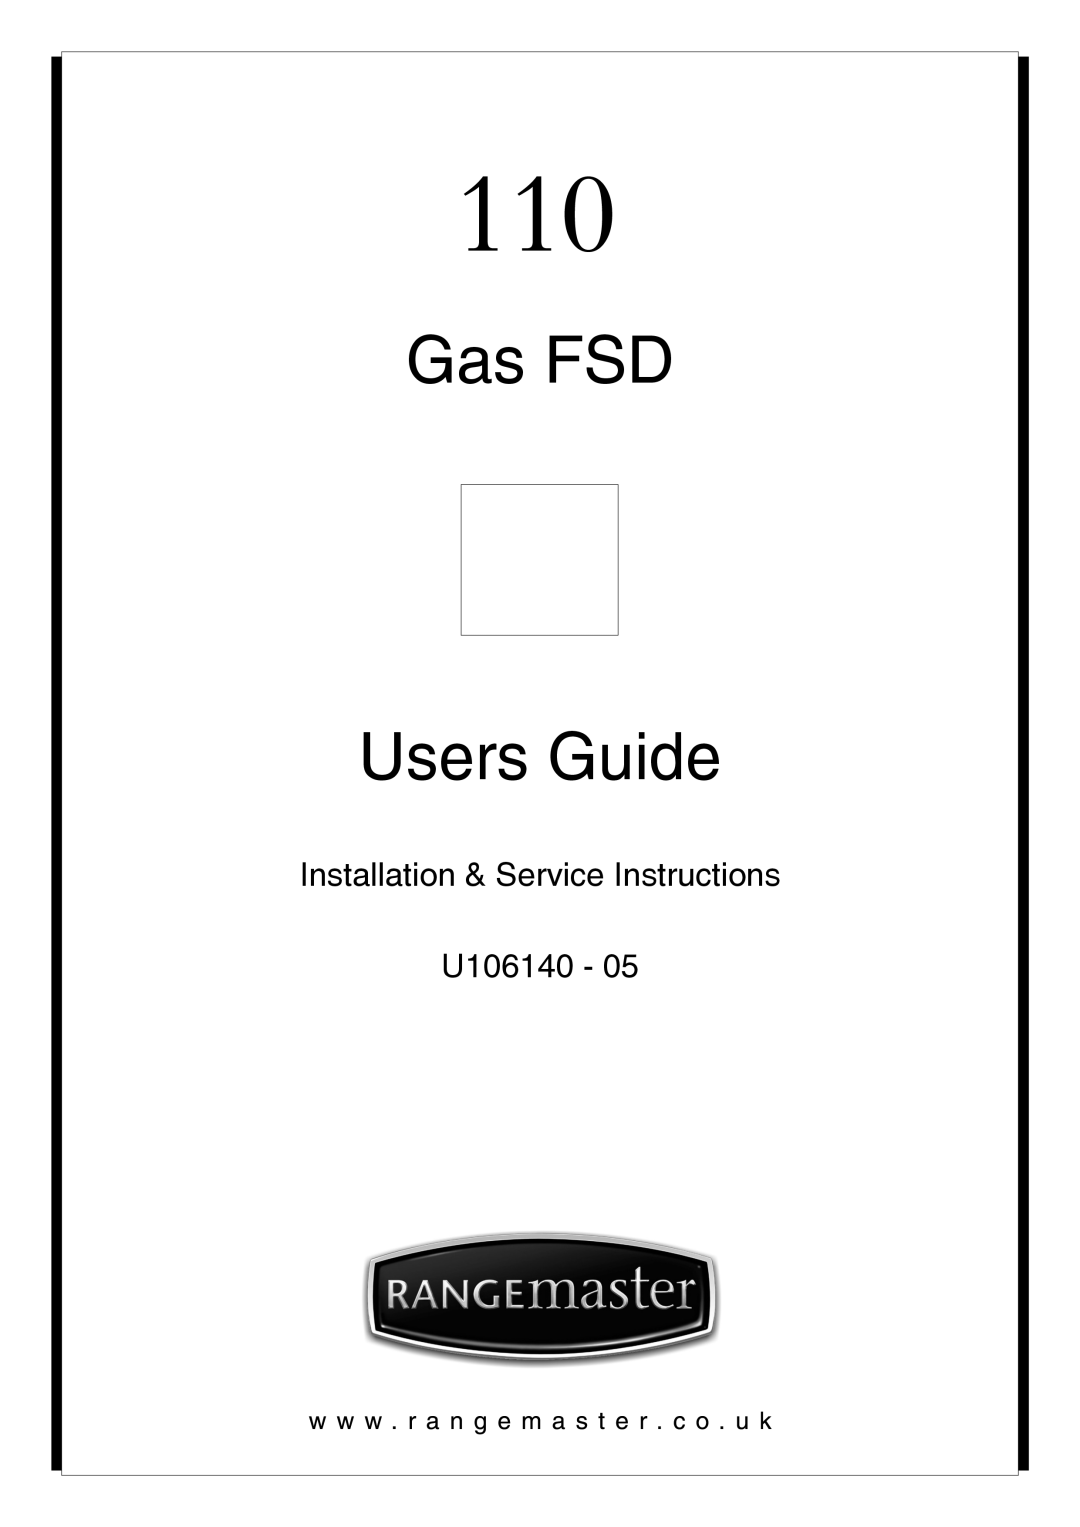 Rangemaster U106140-05 manual Installation & Service Instructions U106140, Gas FSD Users Guide 